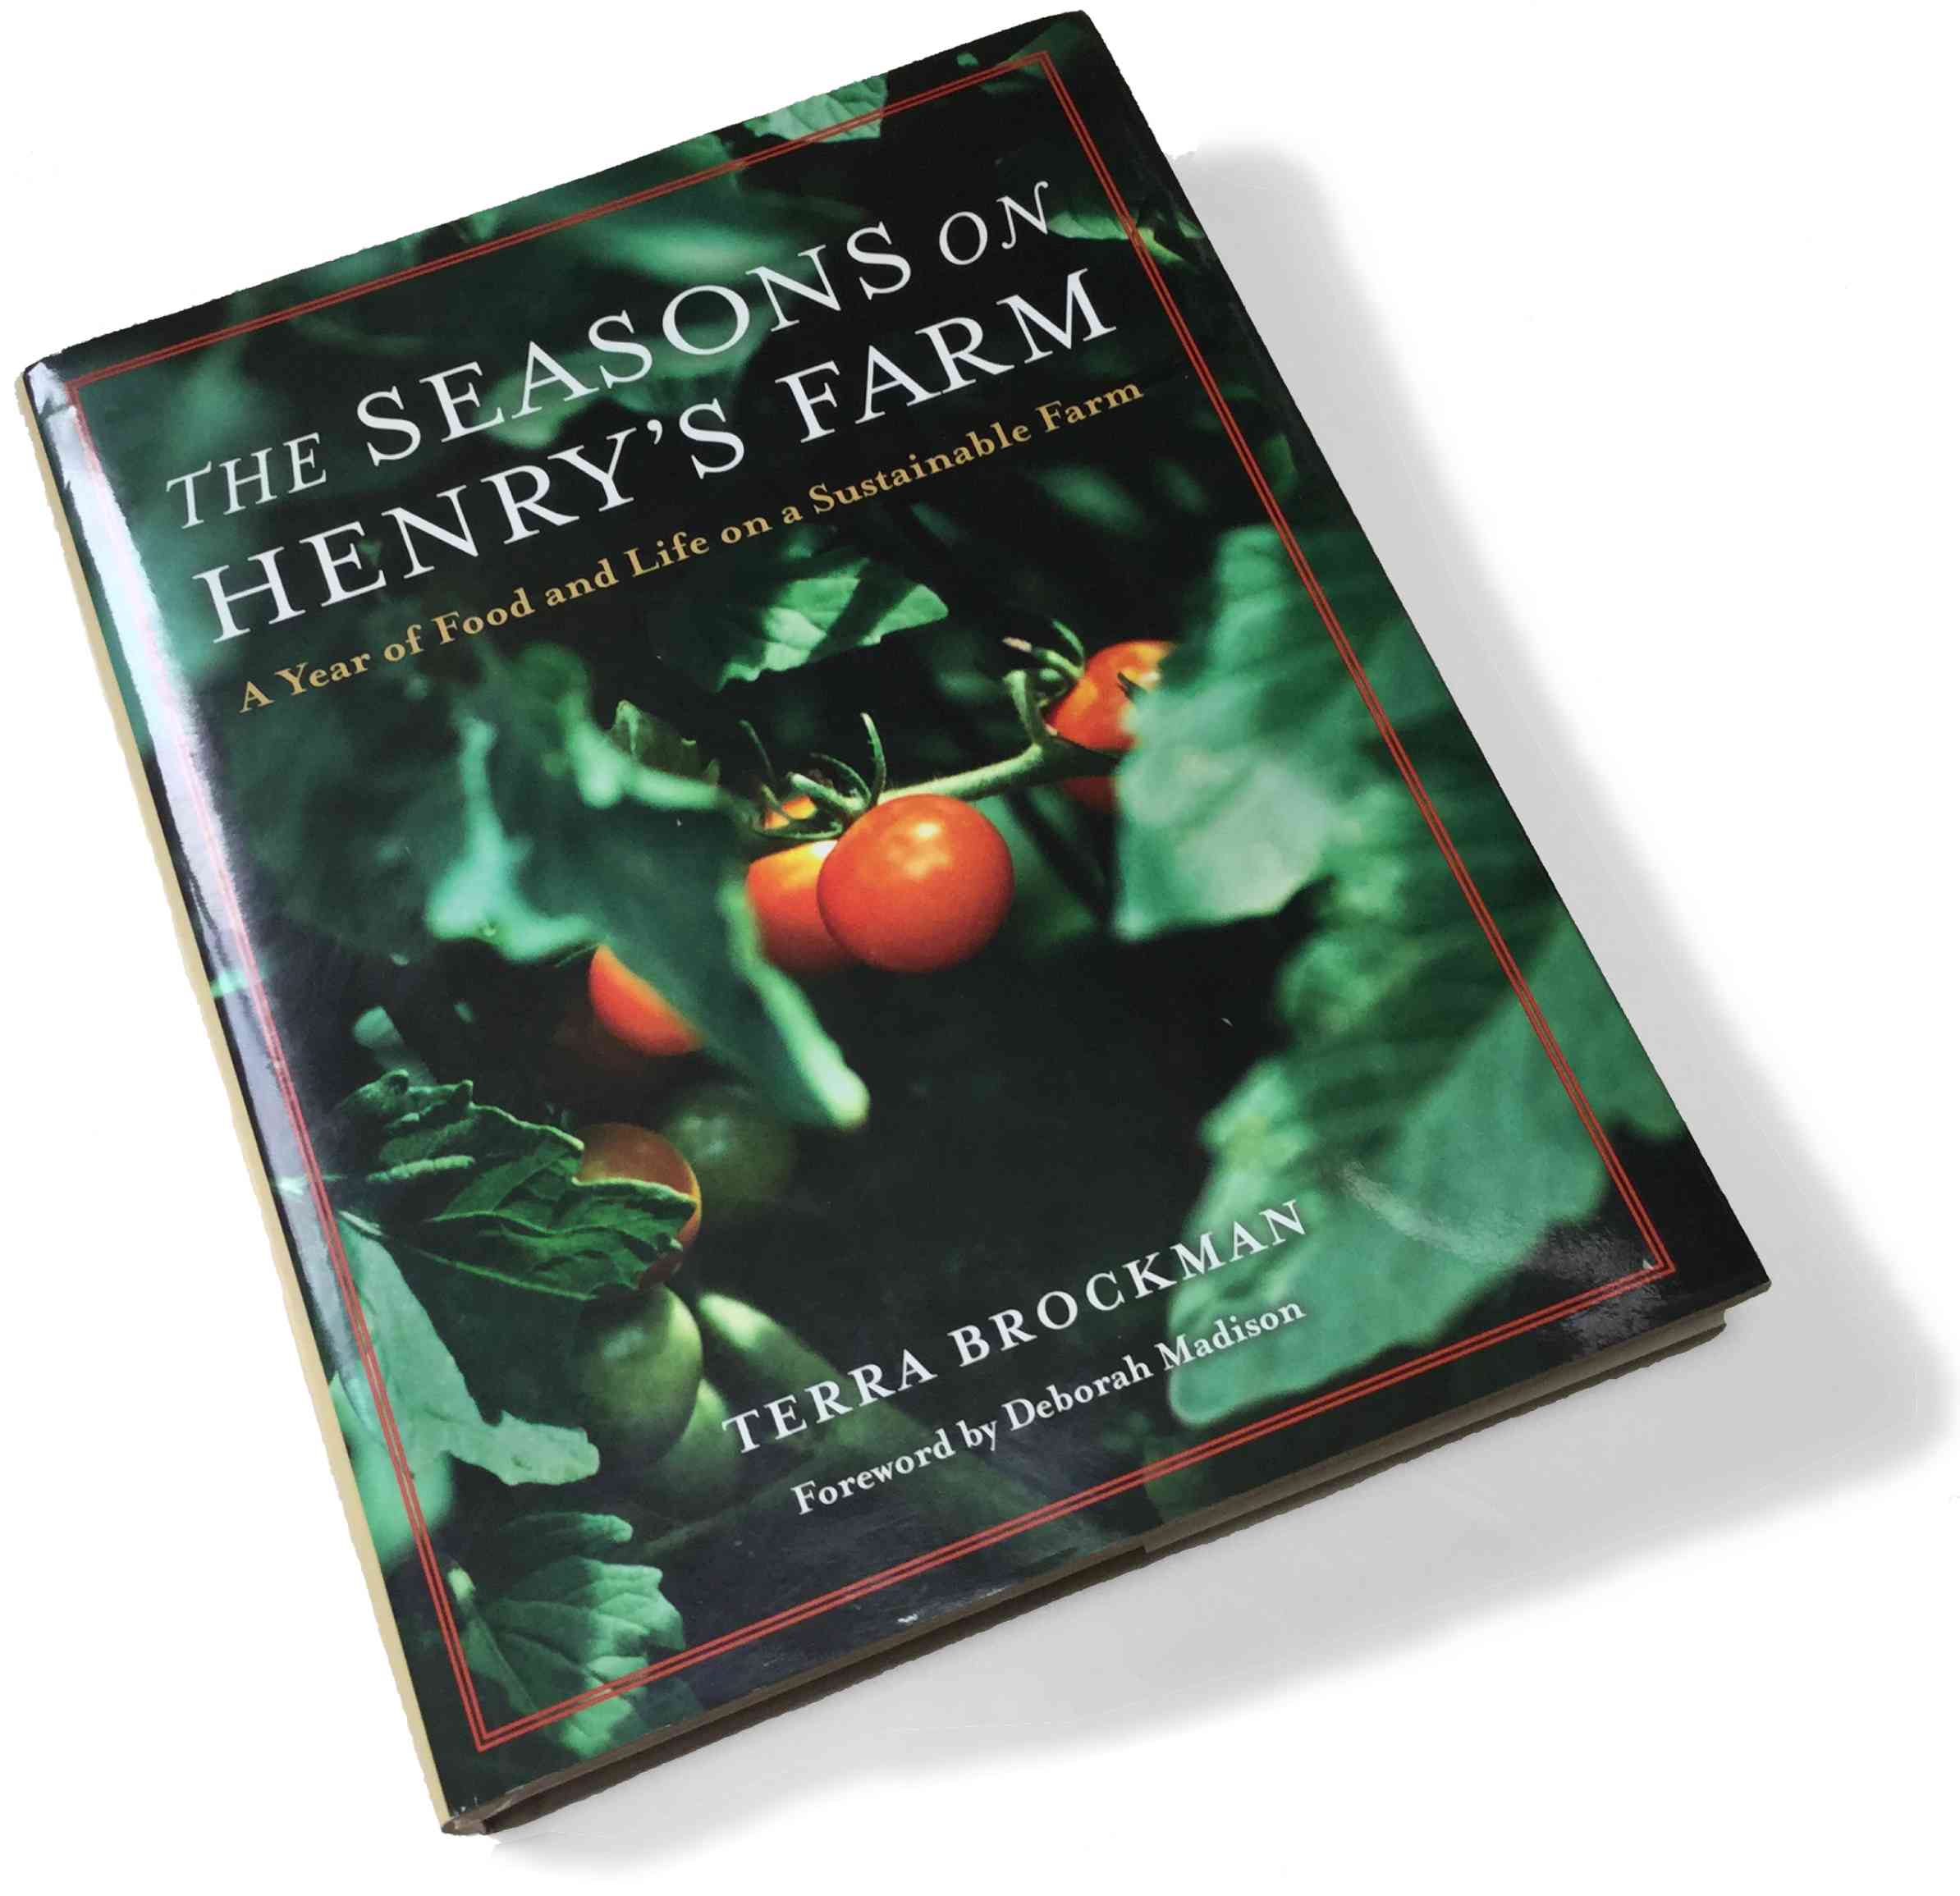 Terra Brockman's book "The Seasons on Henry's Farm"